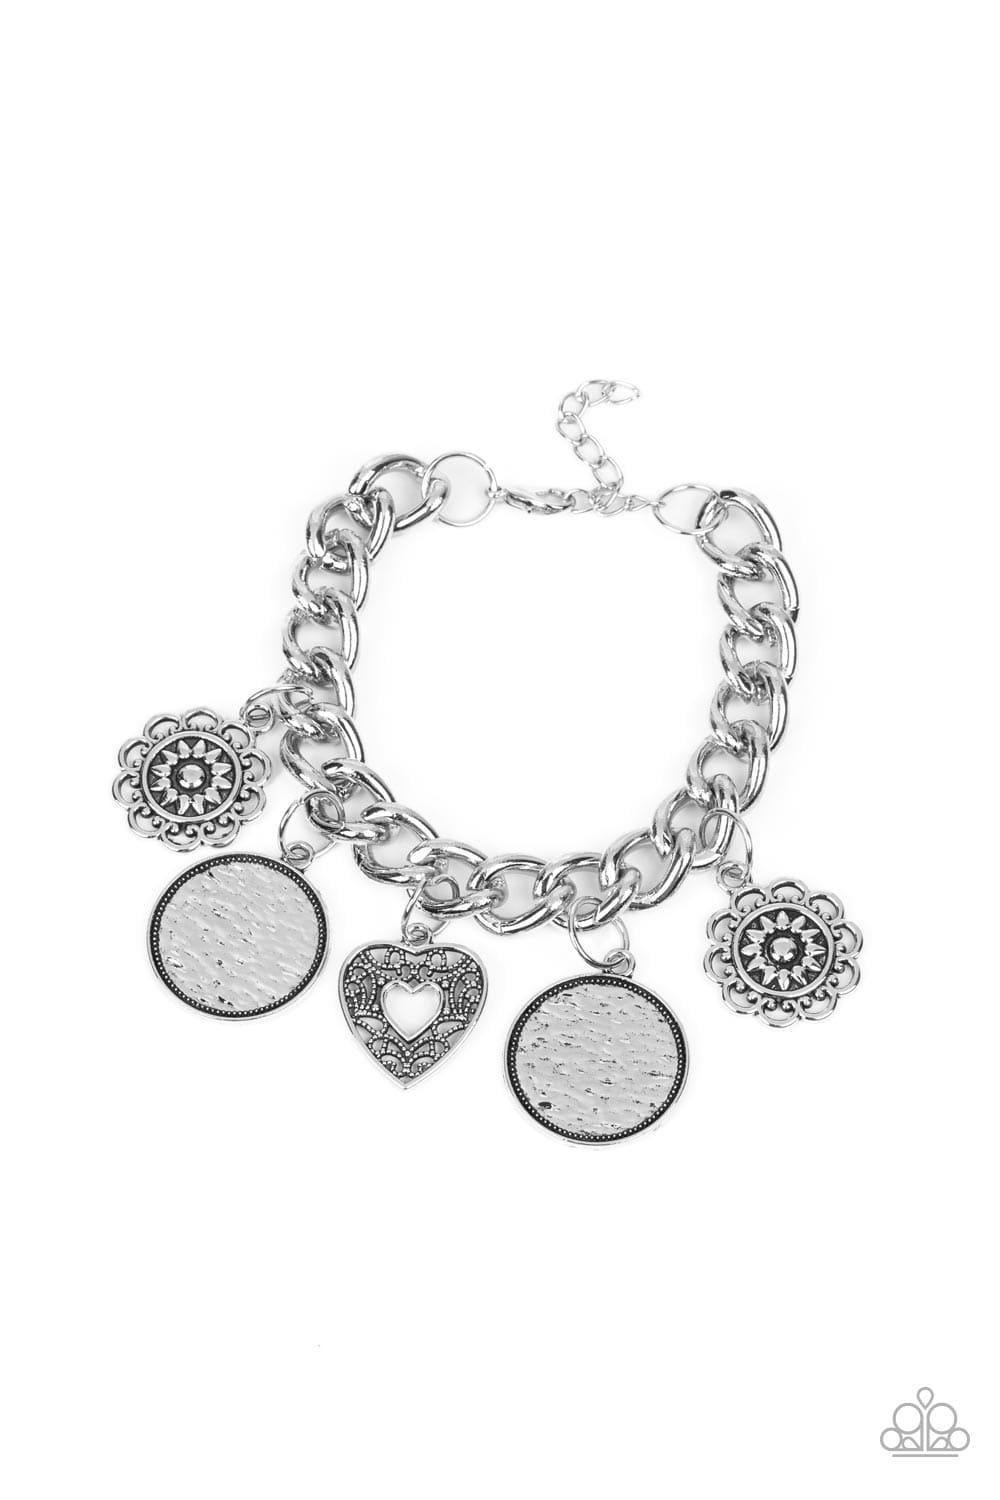 Paparazzi Accessories - Complete Charm-ony - Silver Bracelet - Bling by JessieK